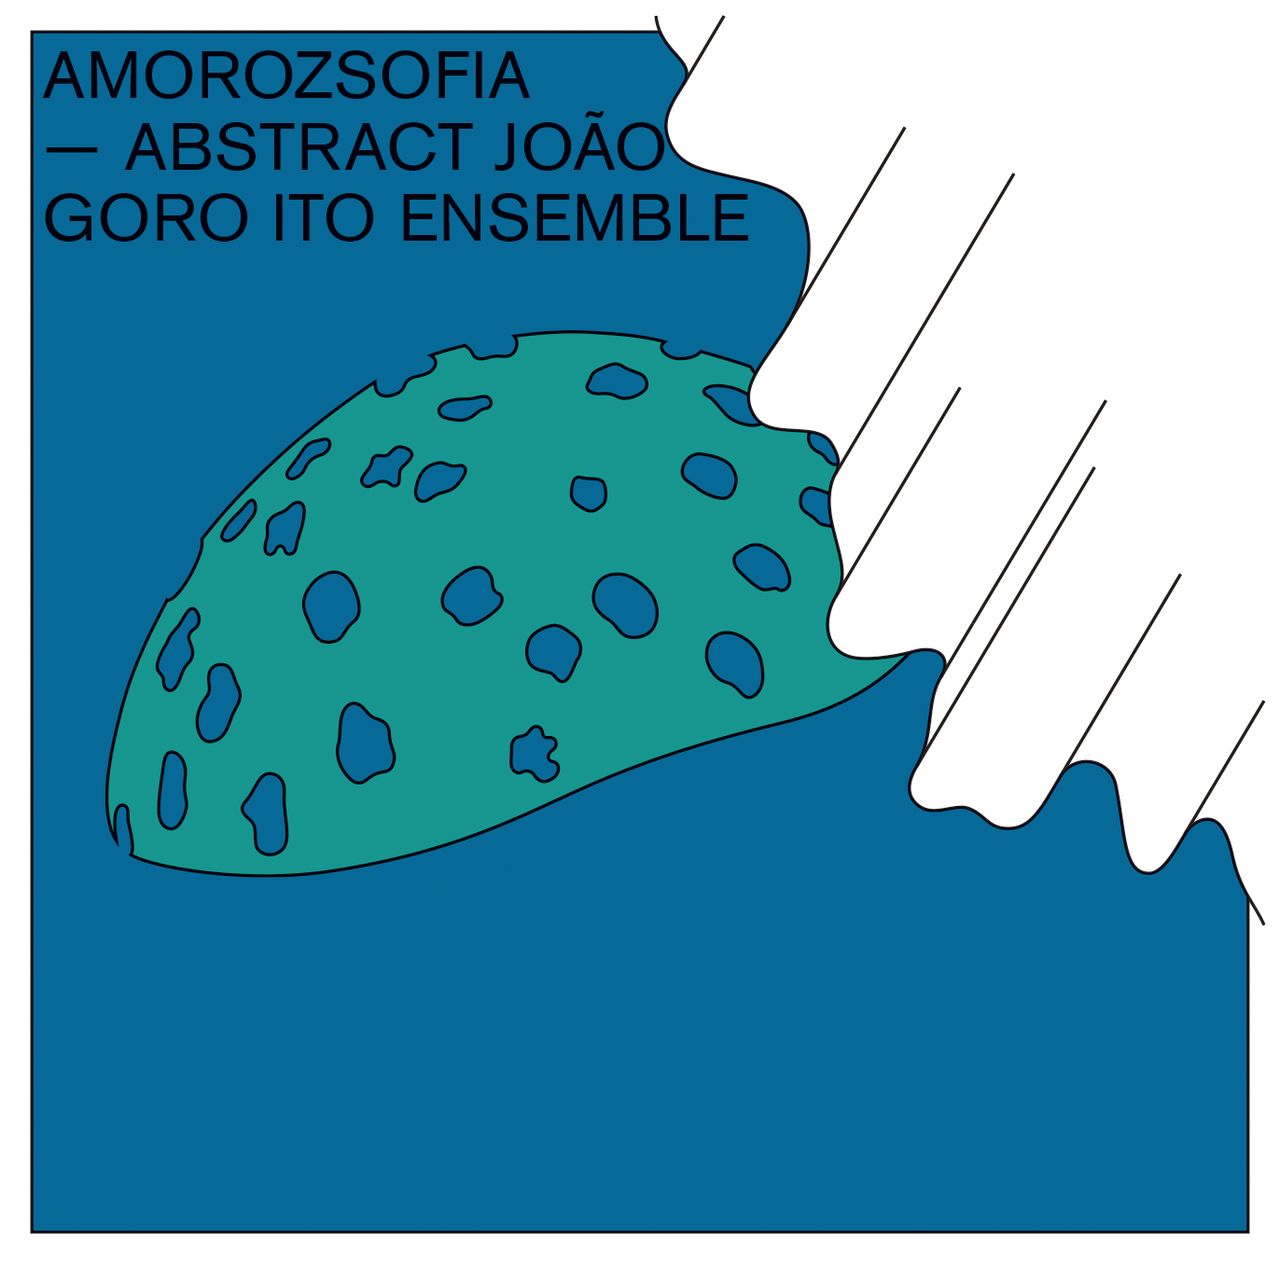 CD「AMOROZOFIA ABSTRACT JOAO GORO ITO ENSEMBLE」@ Universal Music